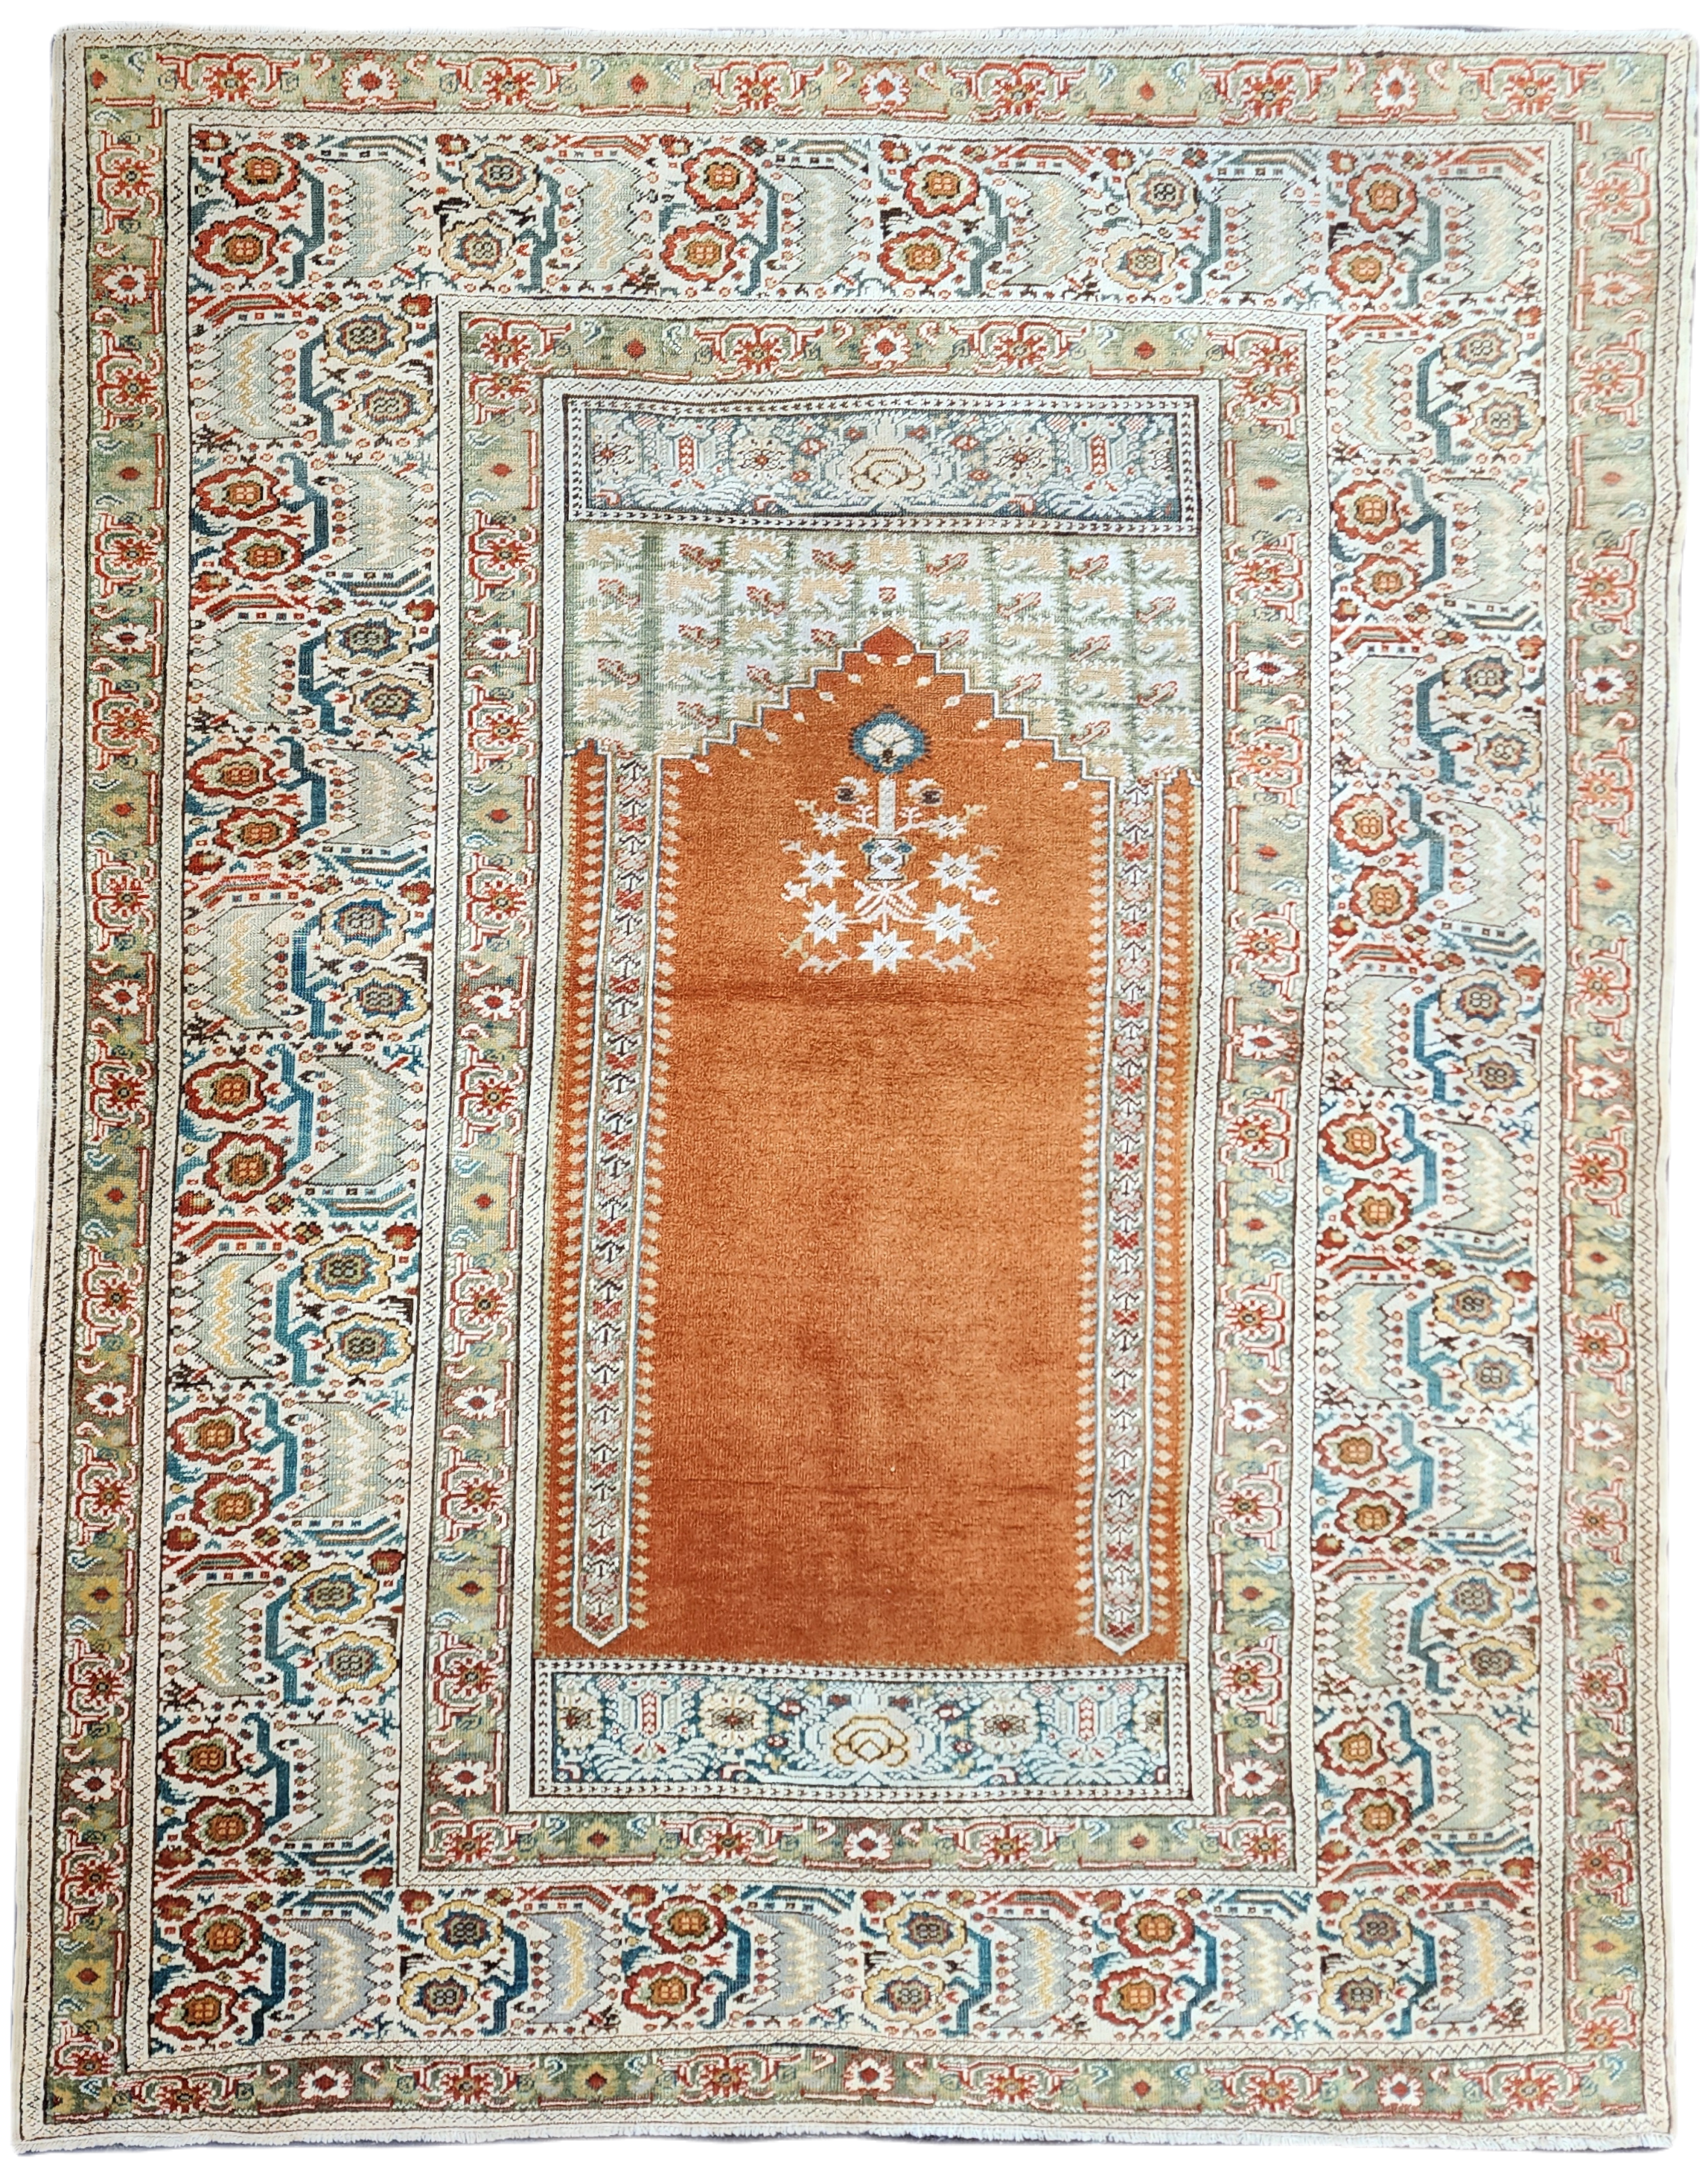 Antique Turkish Rug, 5 ft x 4 ft, Coral/Orange, Green and Beige Turkish Prayer Niche Stlye Carpet Handmade in Balikesir from Natural Wool